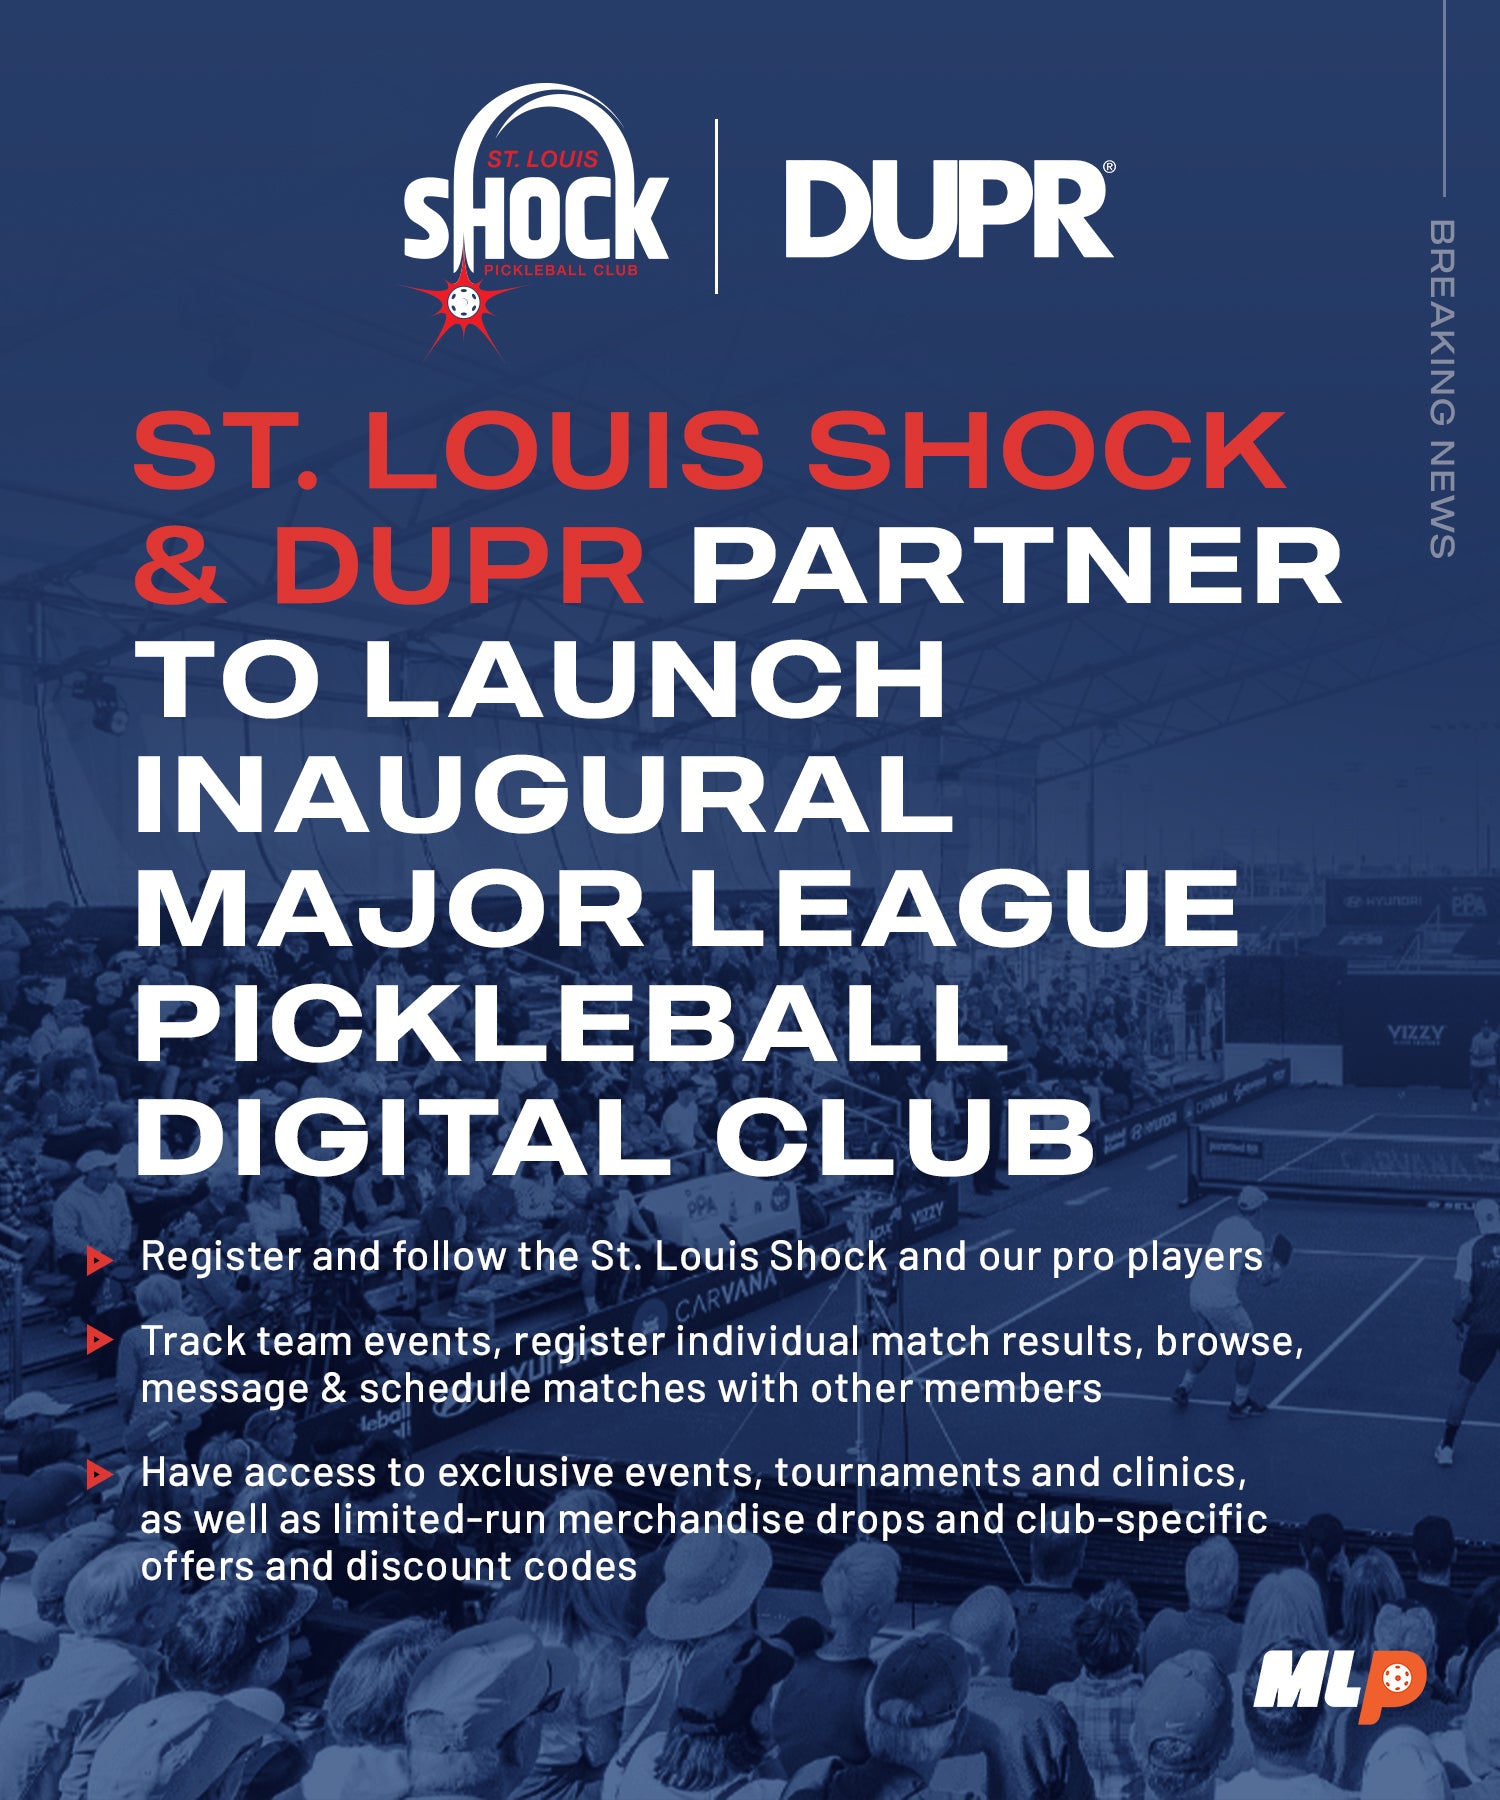 St. Louis Shock and DUPR Partner to Launch Inaugural Major League Pickleball Digital Club